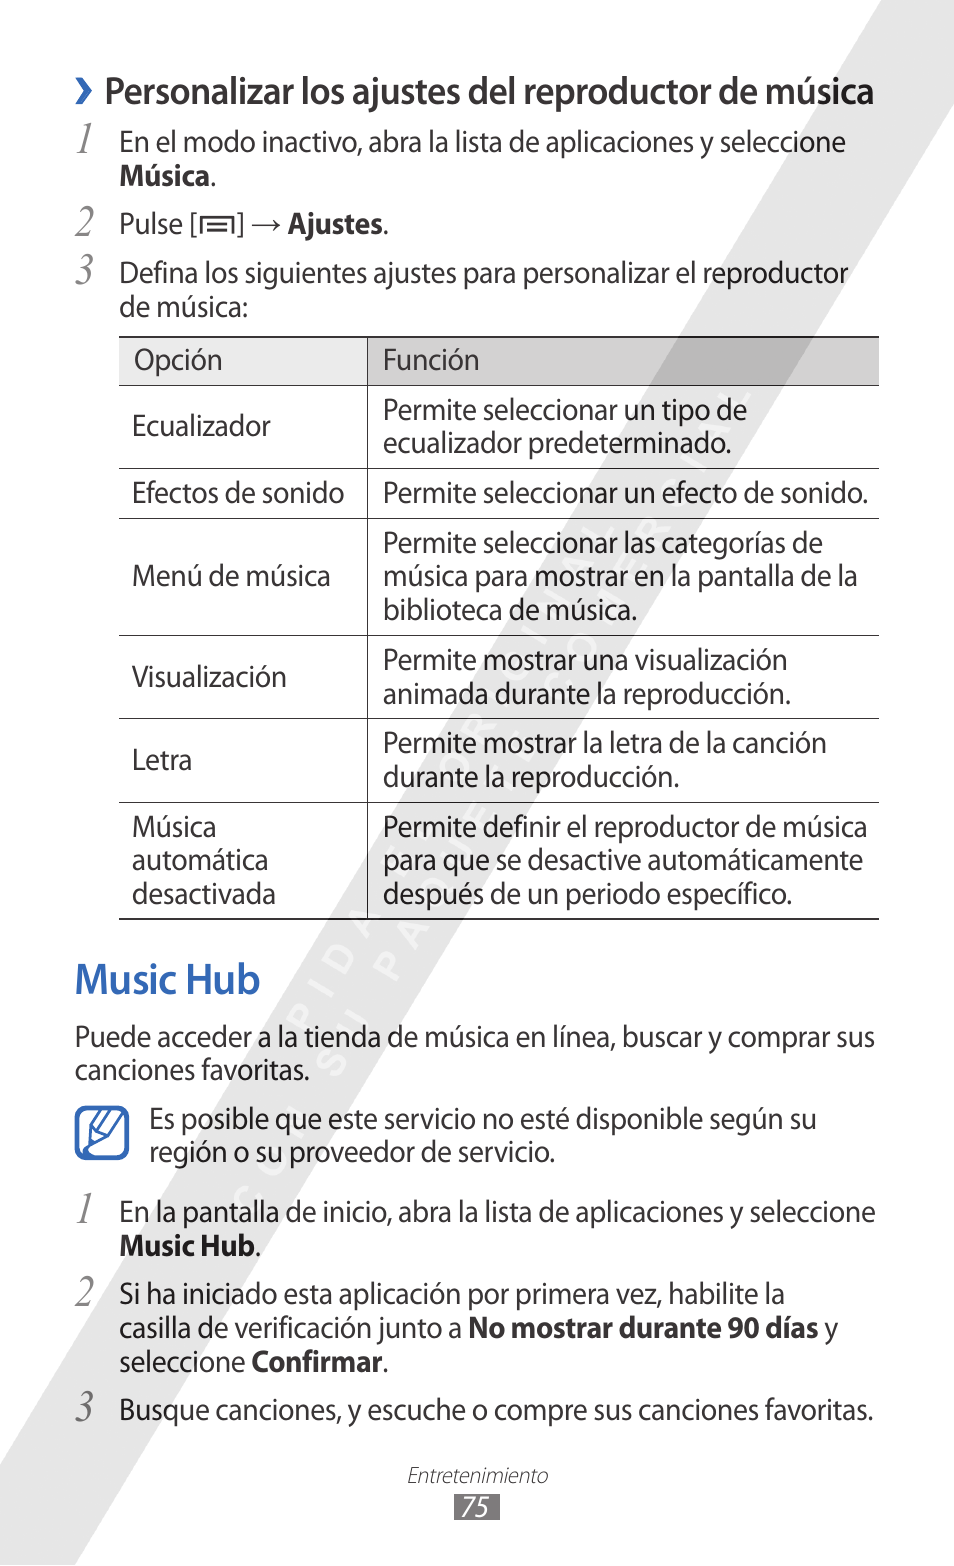 Music hub, Personalizar los ajustes del reproductor de música | Samsung GT-I9100-M16 Manual del usuario | Página 75 / 165